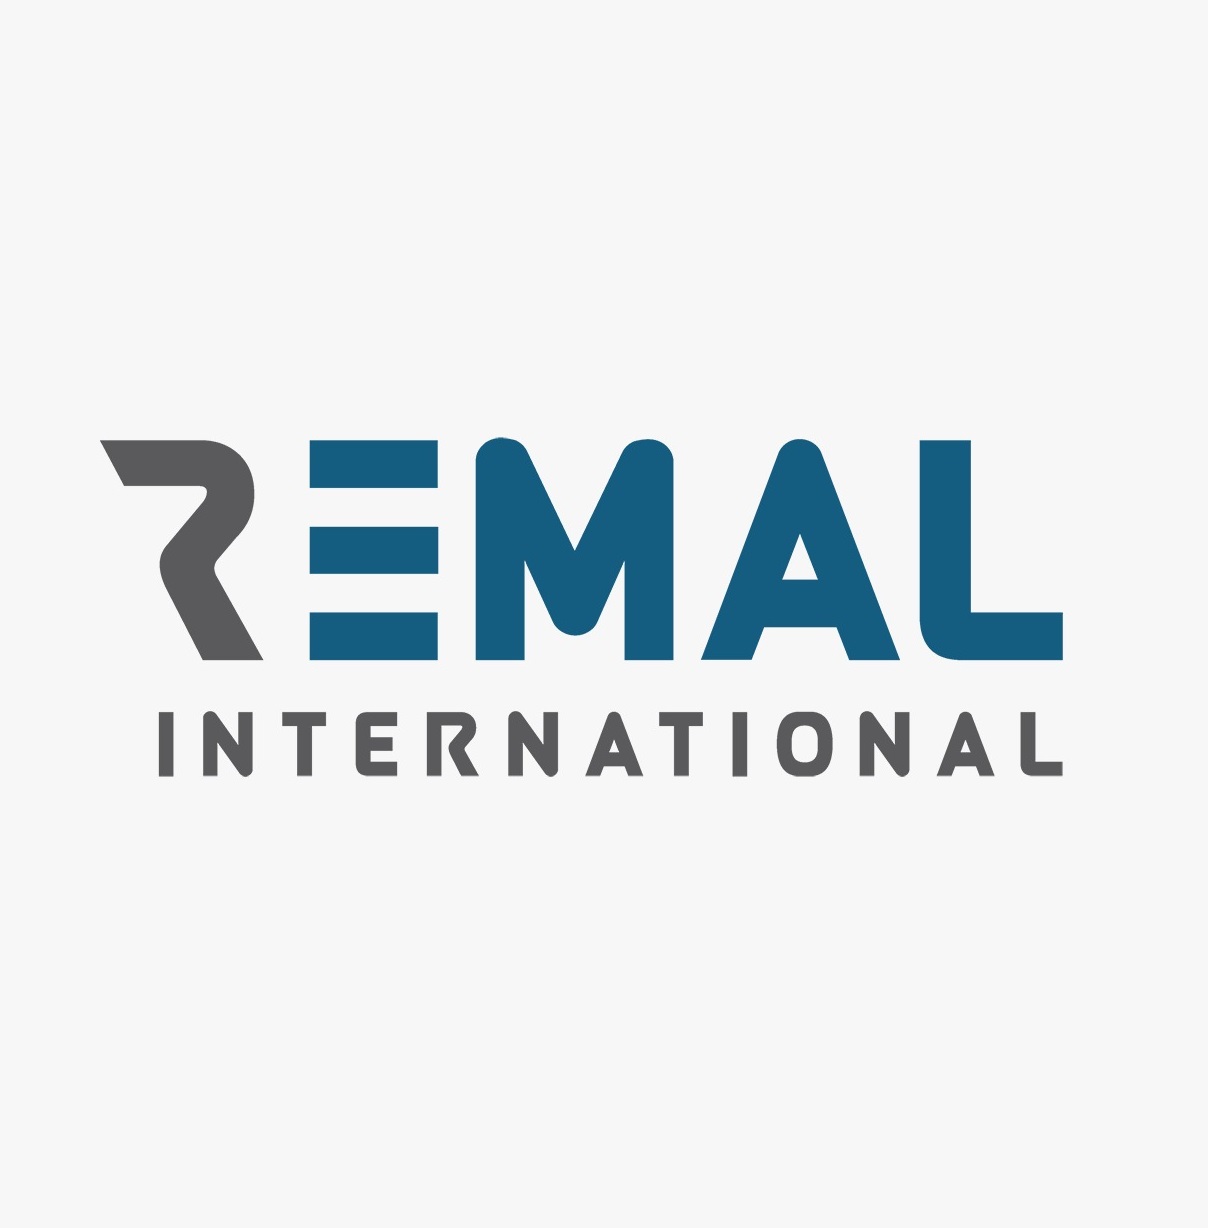 Remal International Group